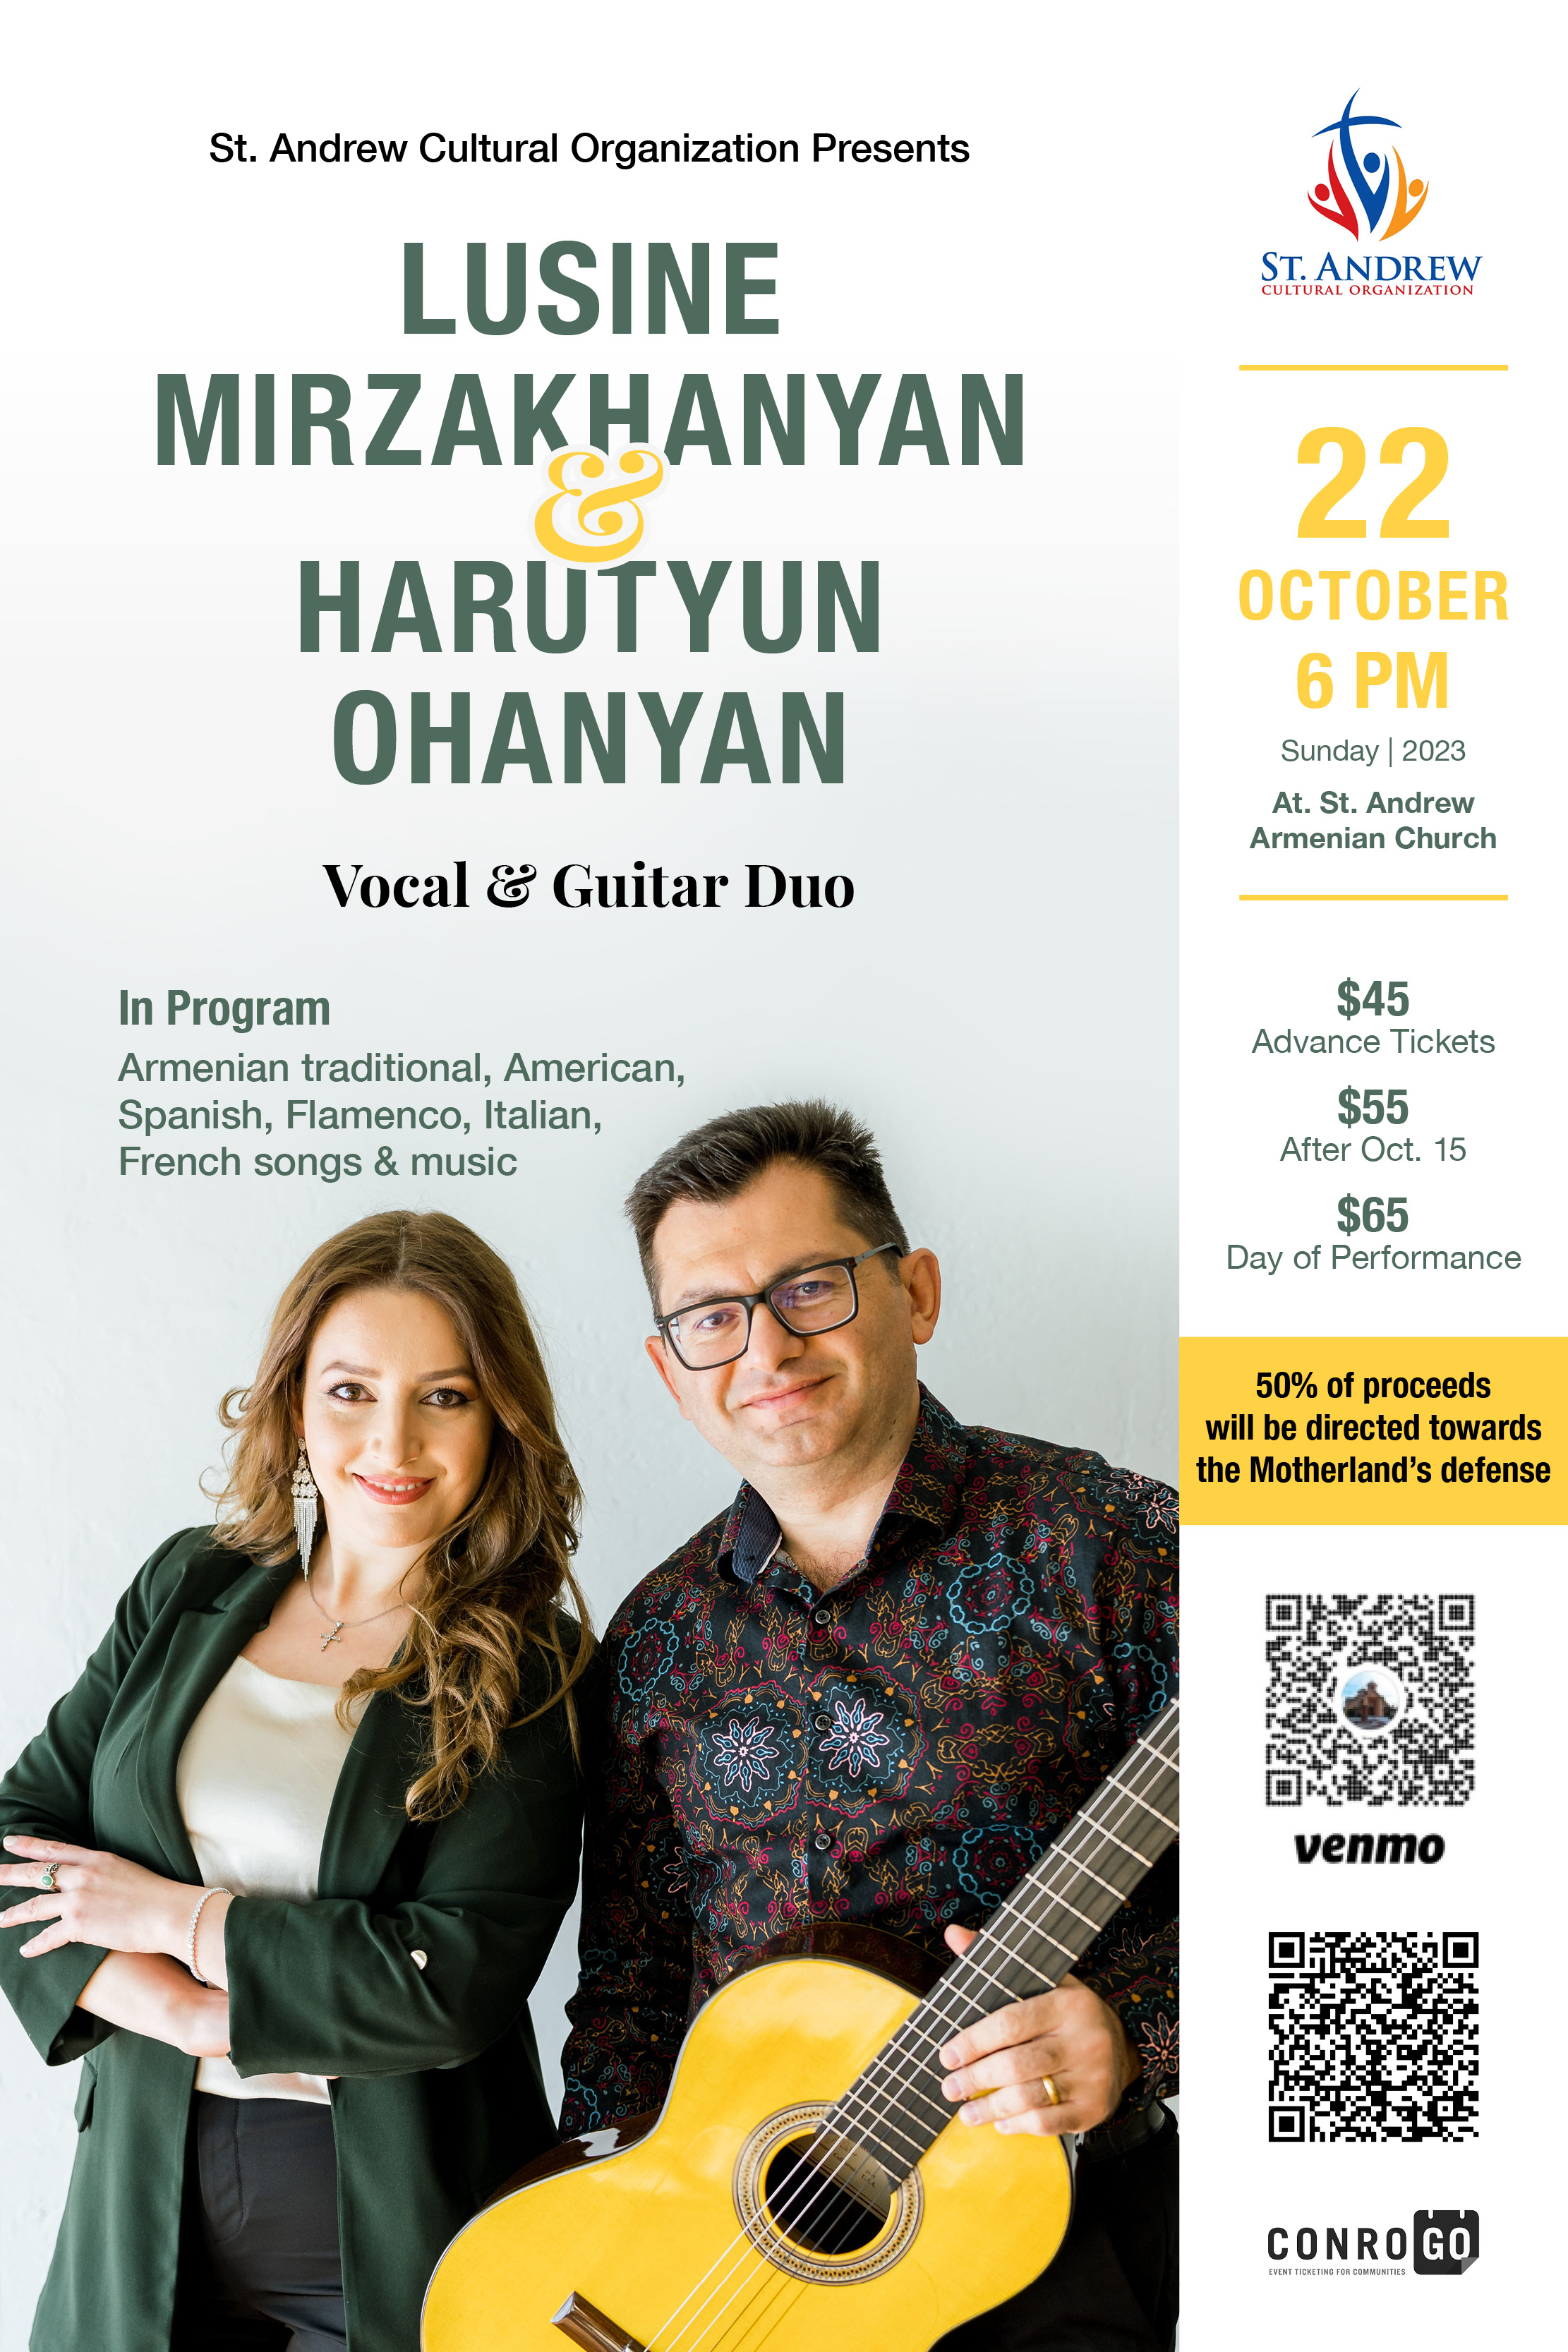 Vocal and Guitar Duo with Lusine Mirzakhanyan and Harutyun Ohanyan